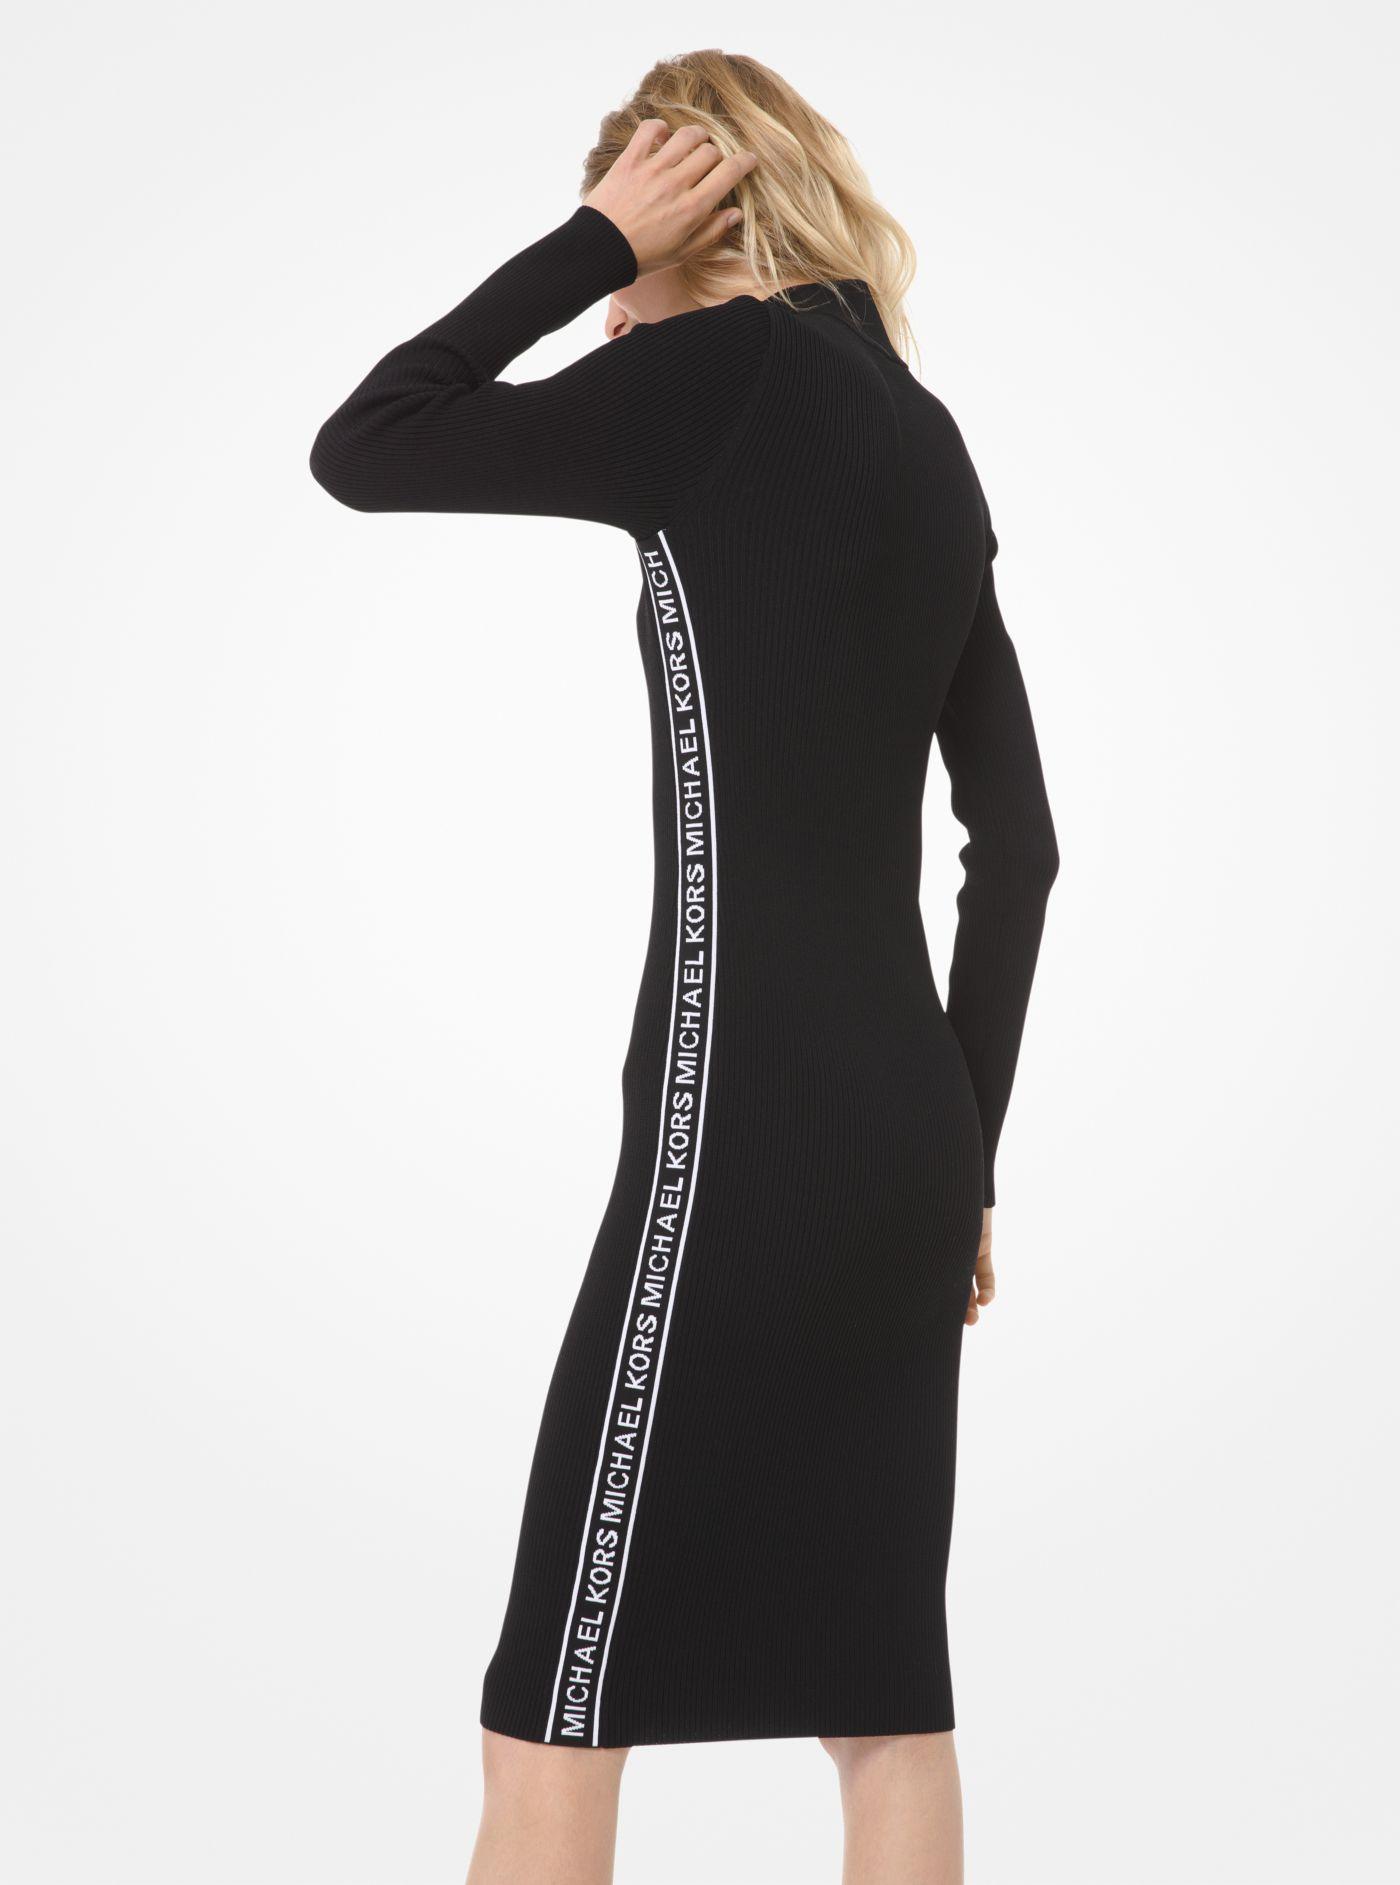 Michael Kors Logo Tape Ribbed Knit Zip Dress in Black | Lyst